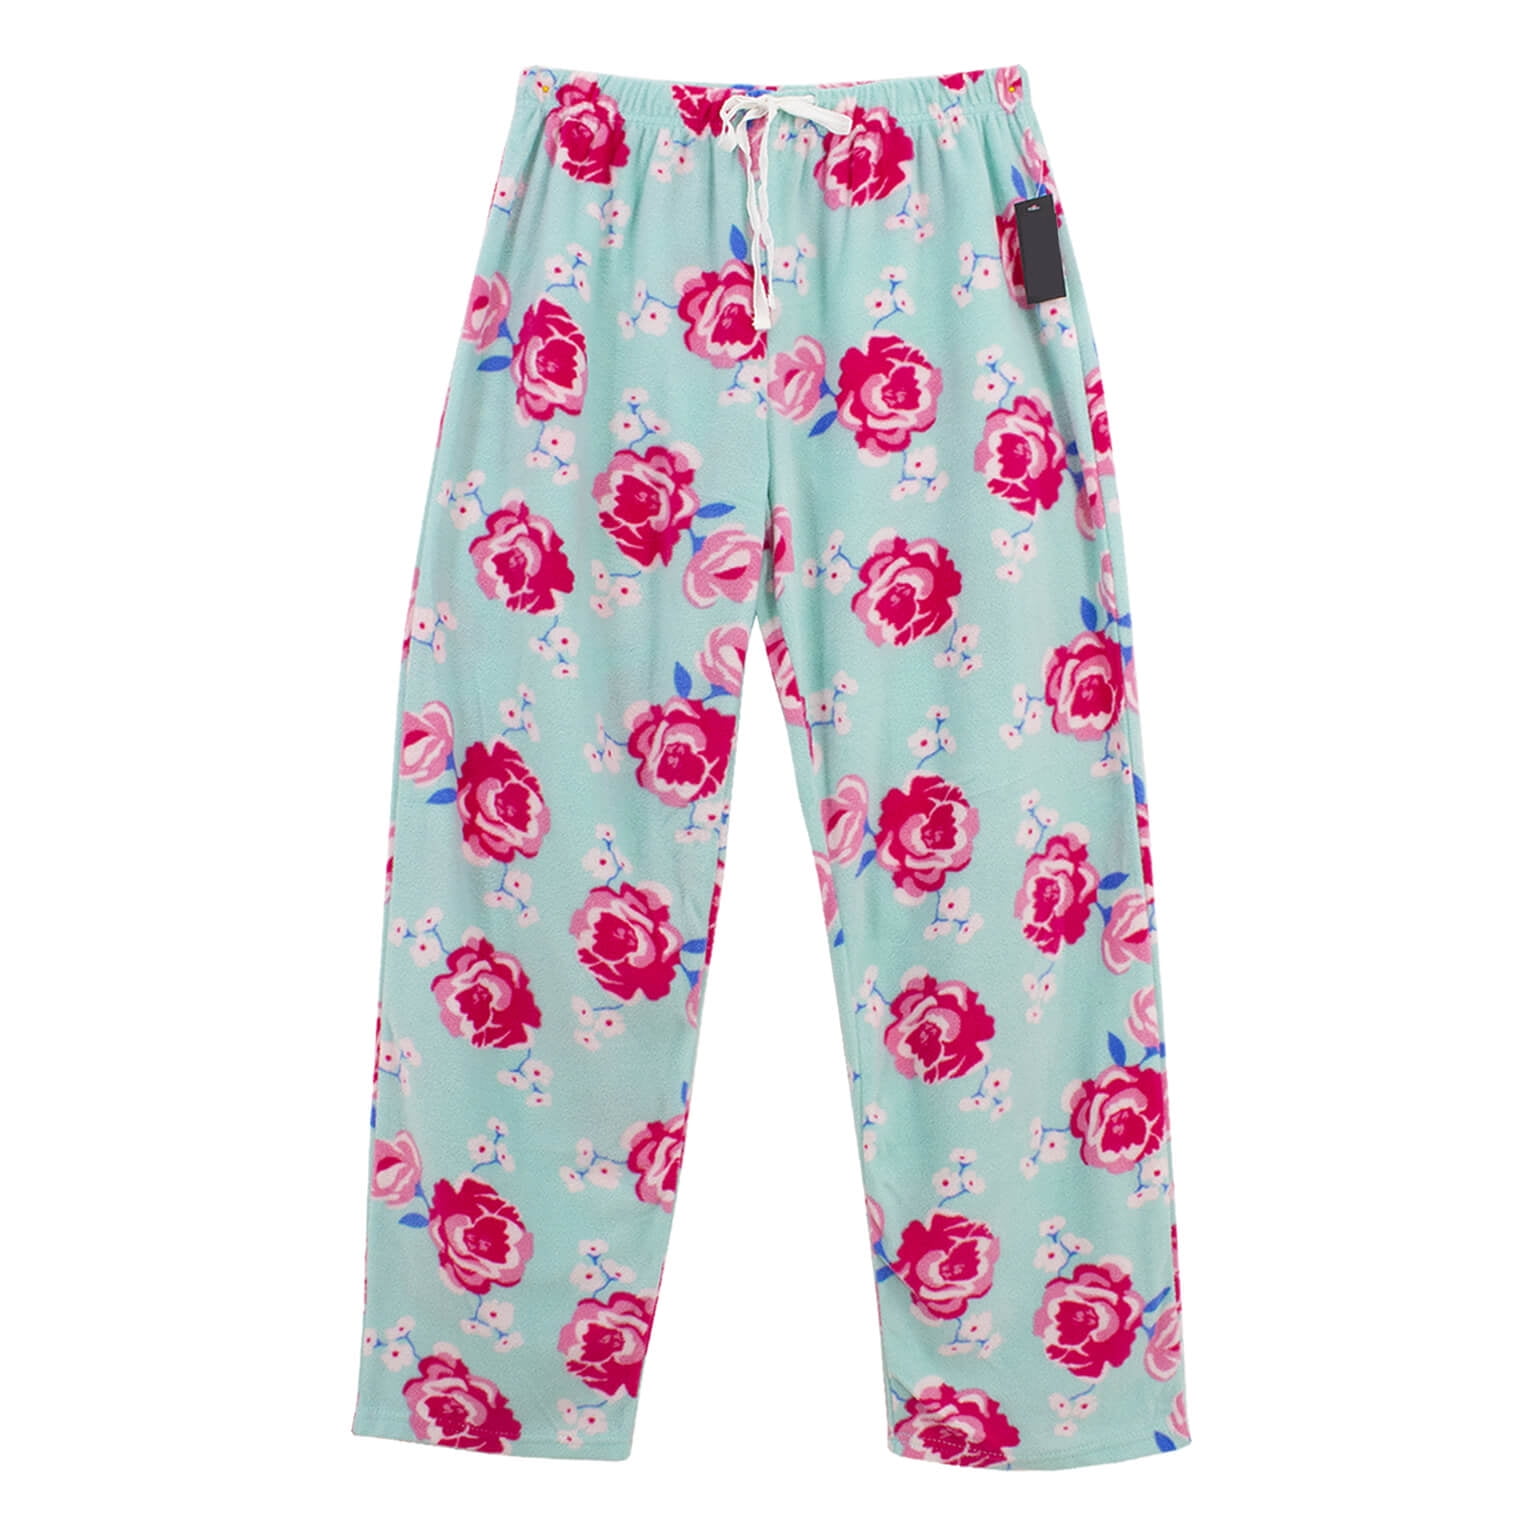 Womens Ladies Plush Fleece PJ Pajama Pants 3122FLWR, Sky Blue Pink